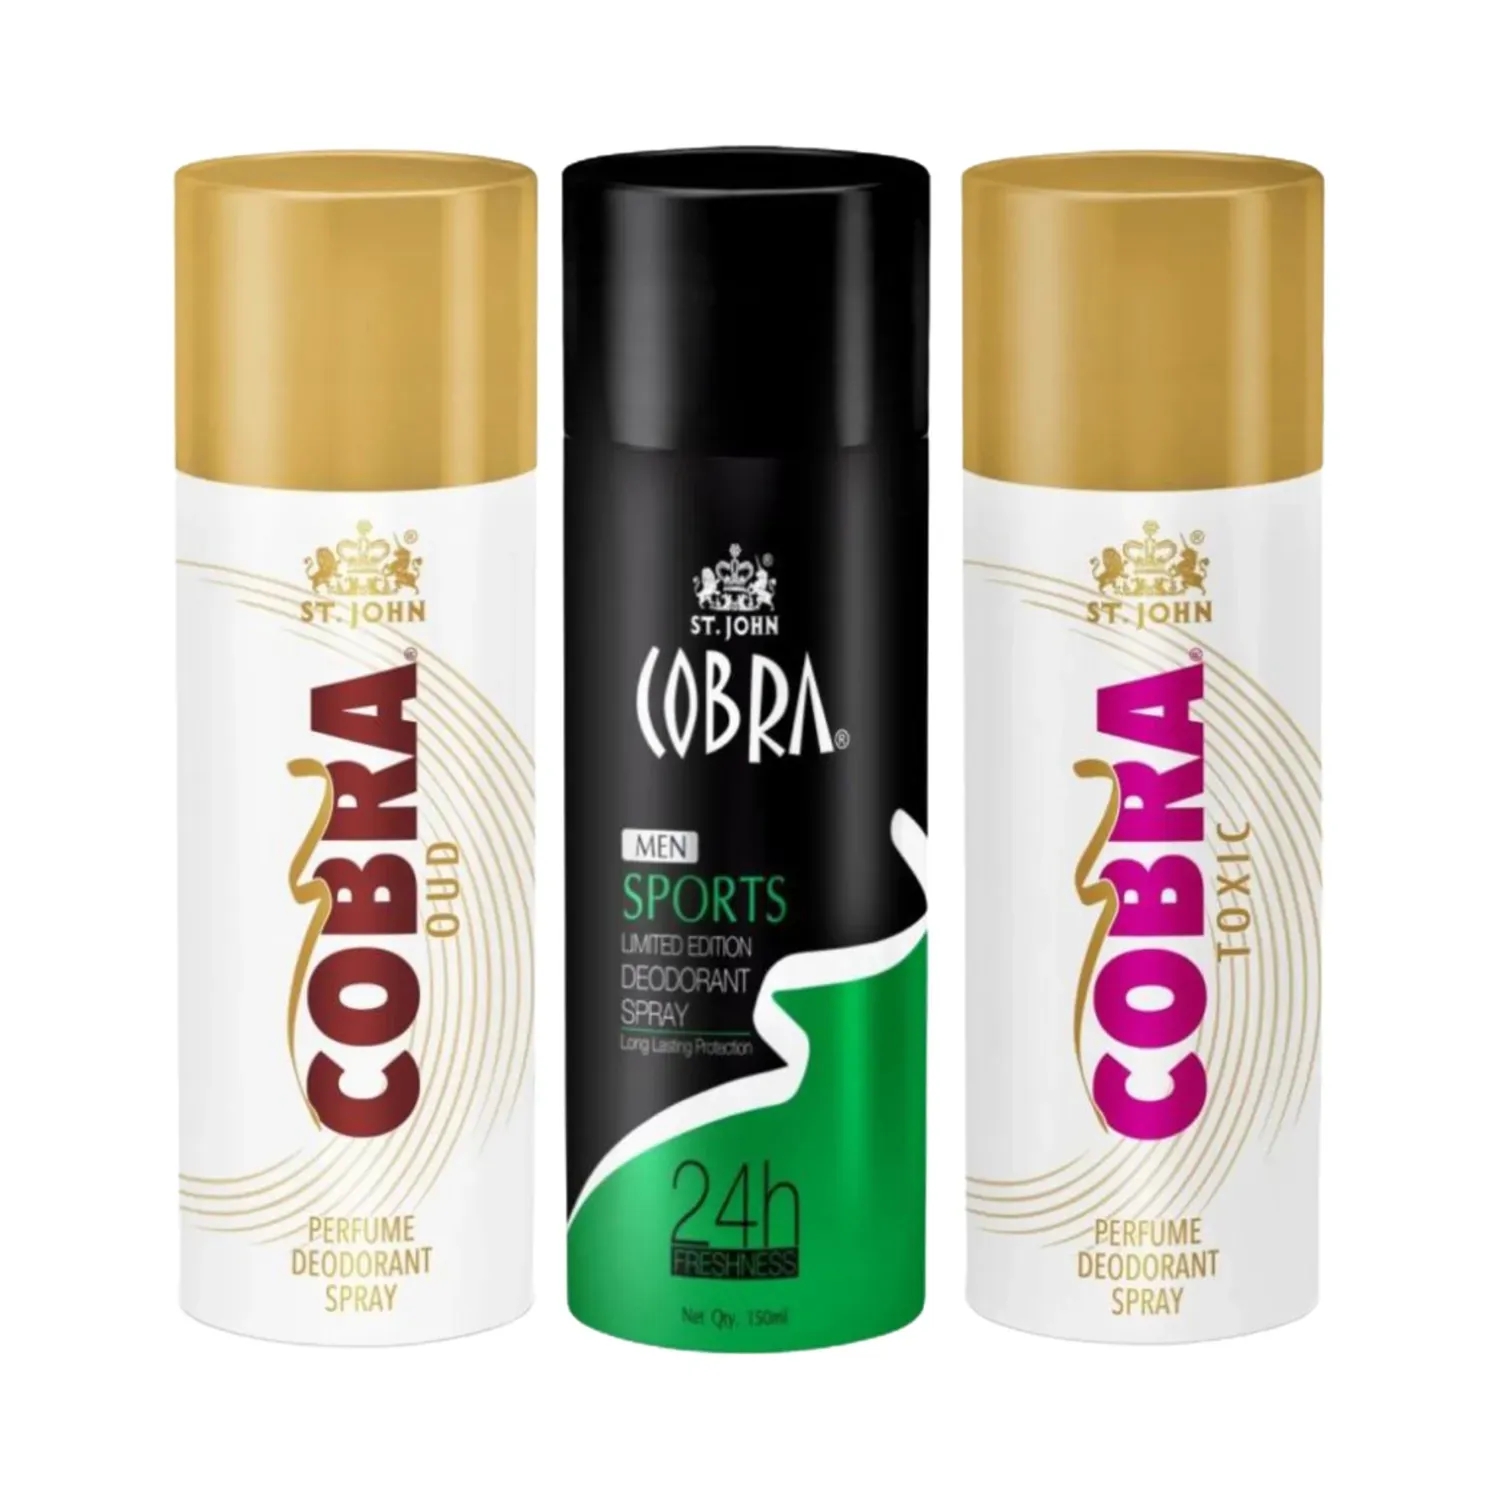 ST.JOHN | ST.JOHN Cobra Sports, Envy & Oud parfum Deodorant Spray (3 Pcs)